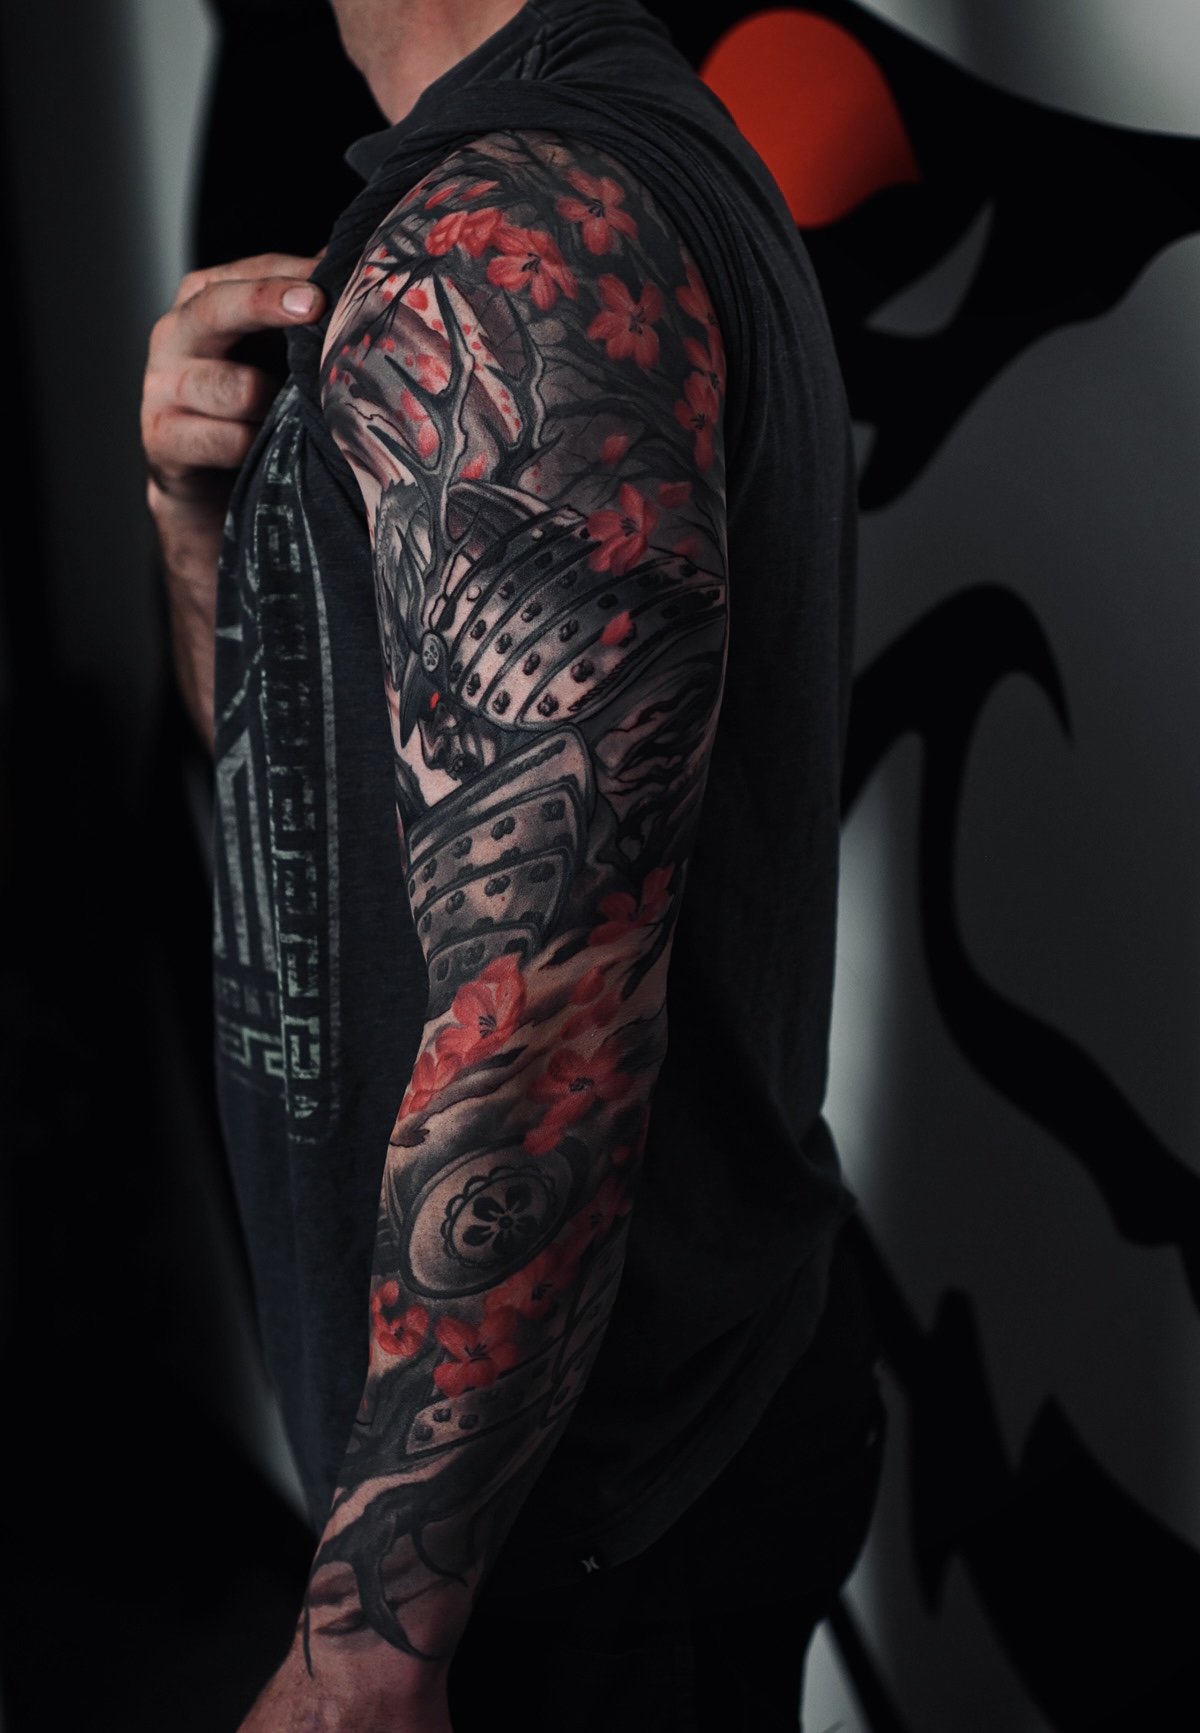 samurai growing cherry blossom tree roots abstract elements  Men's neo japanese sleeve tattoo with red highlights  asian Tattoo artist: Kai at 7th Samurai. YEG Edmonton, Alberta, Canada best 2023